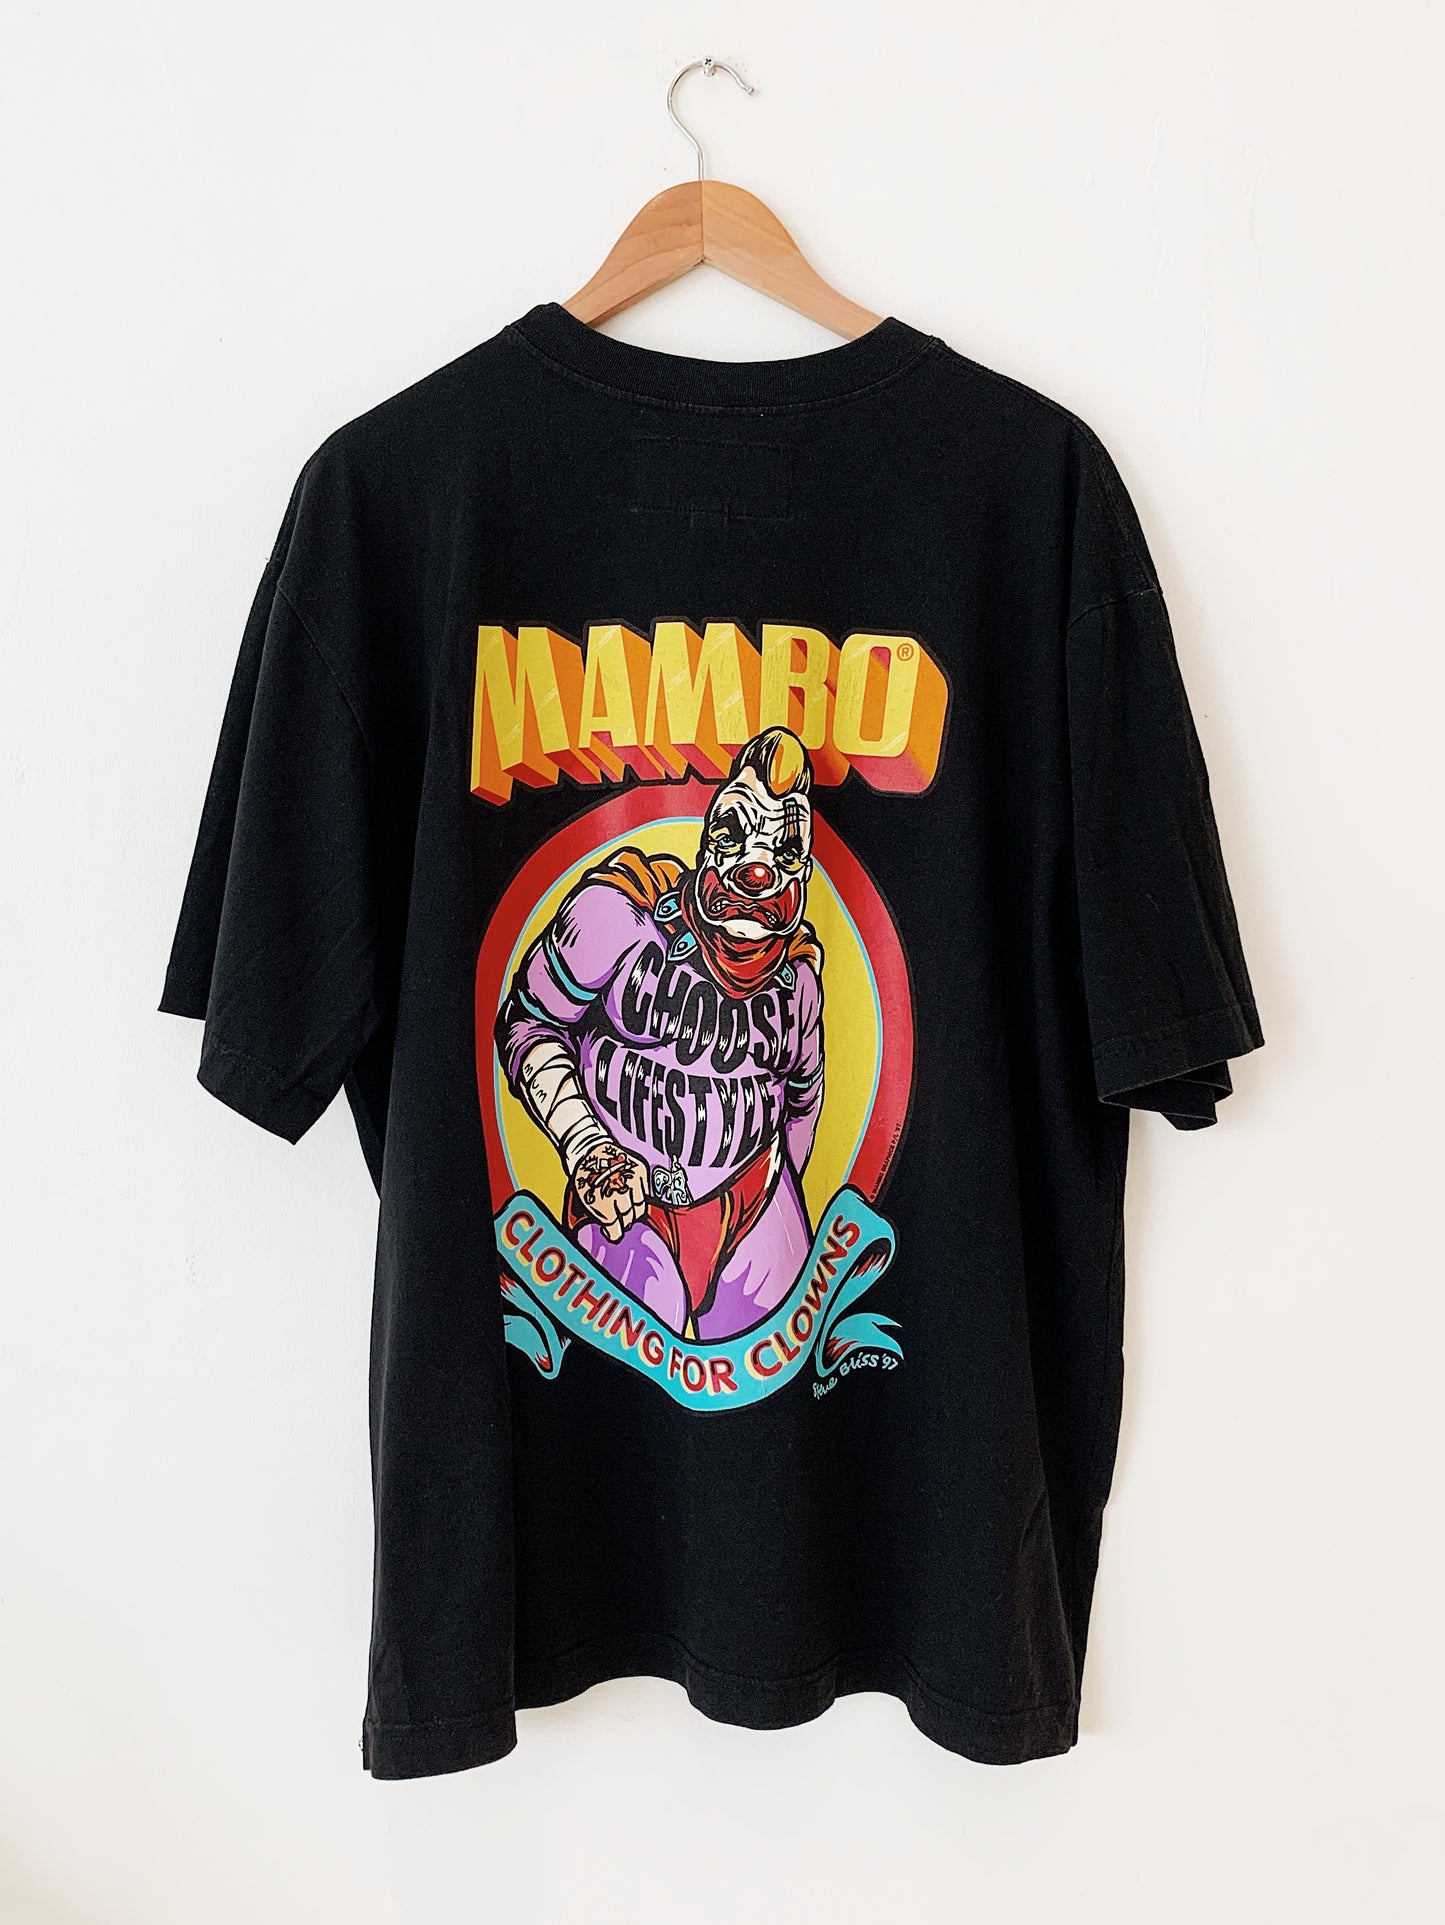 Vintage Steve Bliss Mambo "Clothing For Clowns" '97 T-Shirt